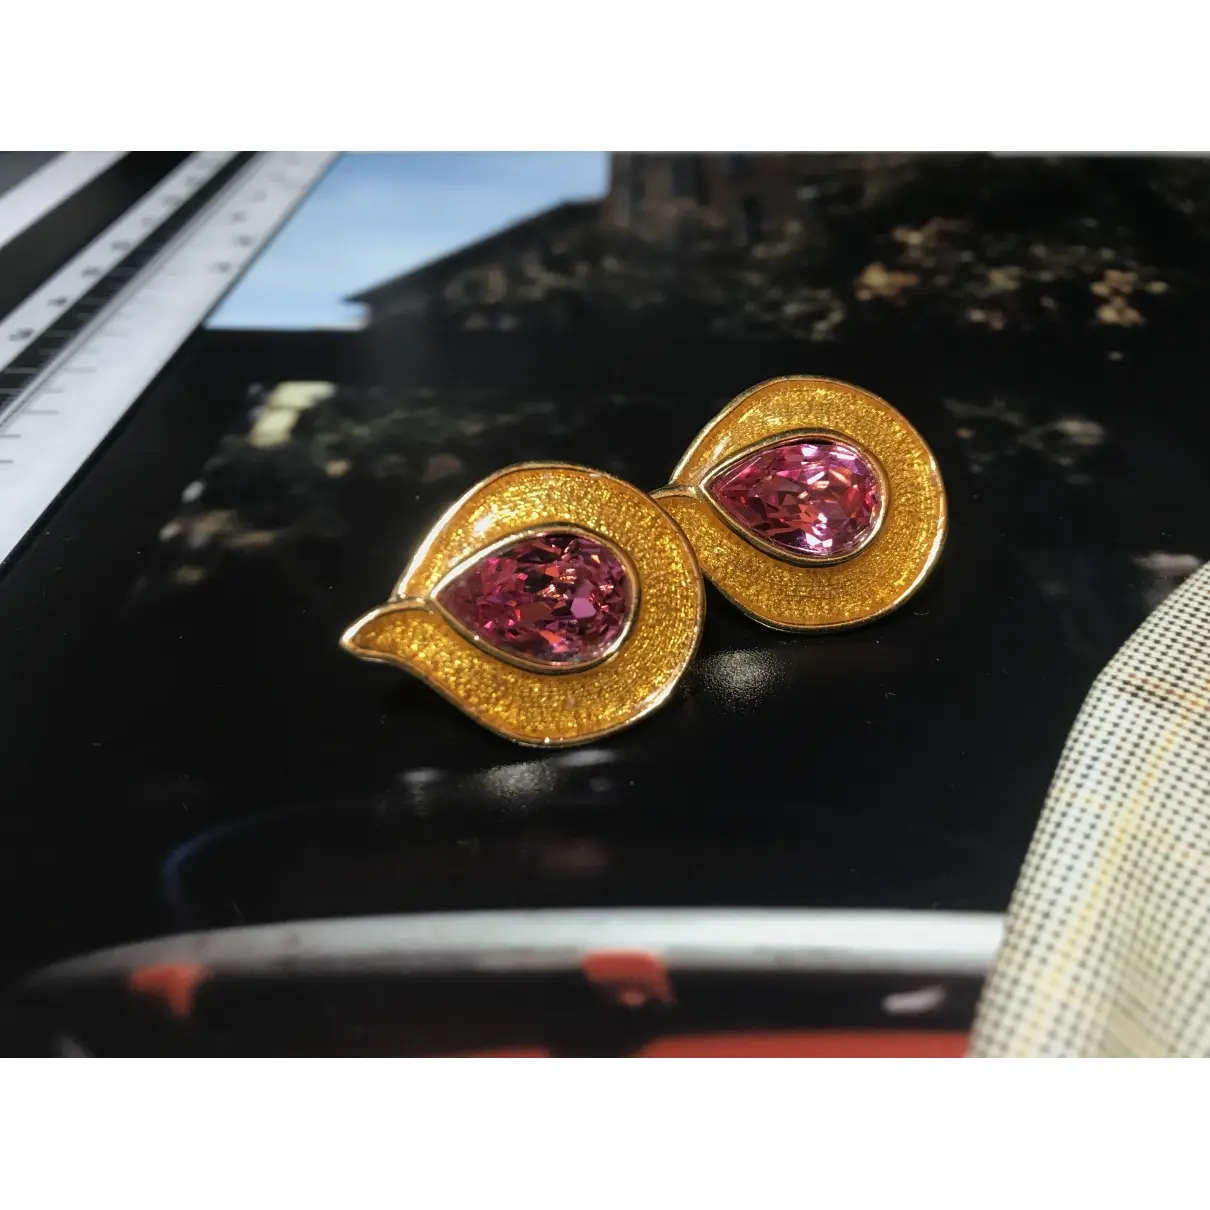 Yves Saint Laurent Arty crystal earrings for sale - Vintage